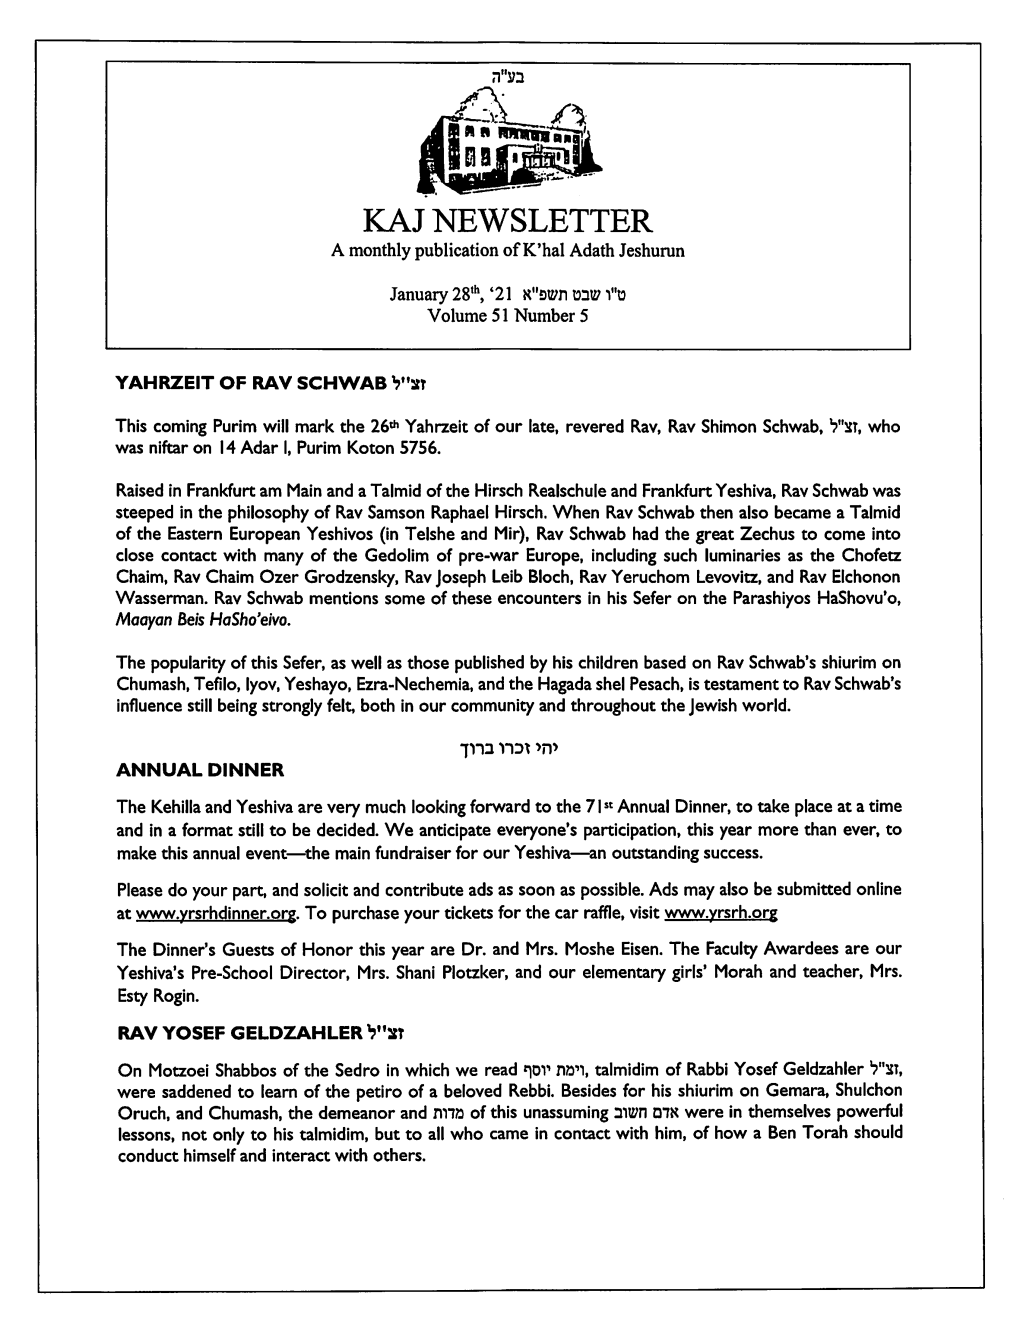 KAJ NEWSLETTER a Monthly Publication of K'hal Adath Jeshurun